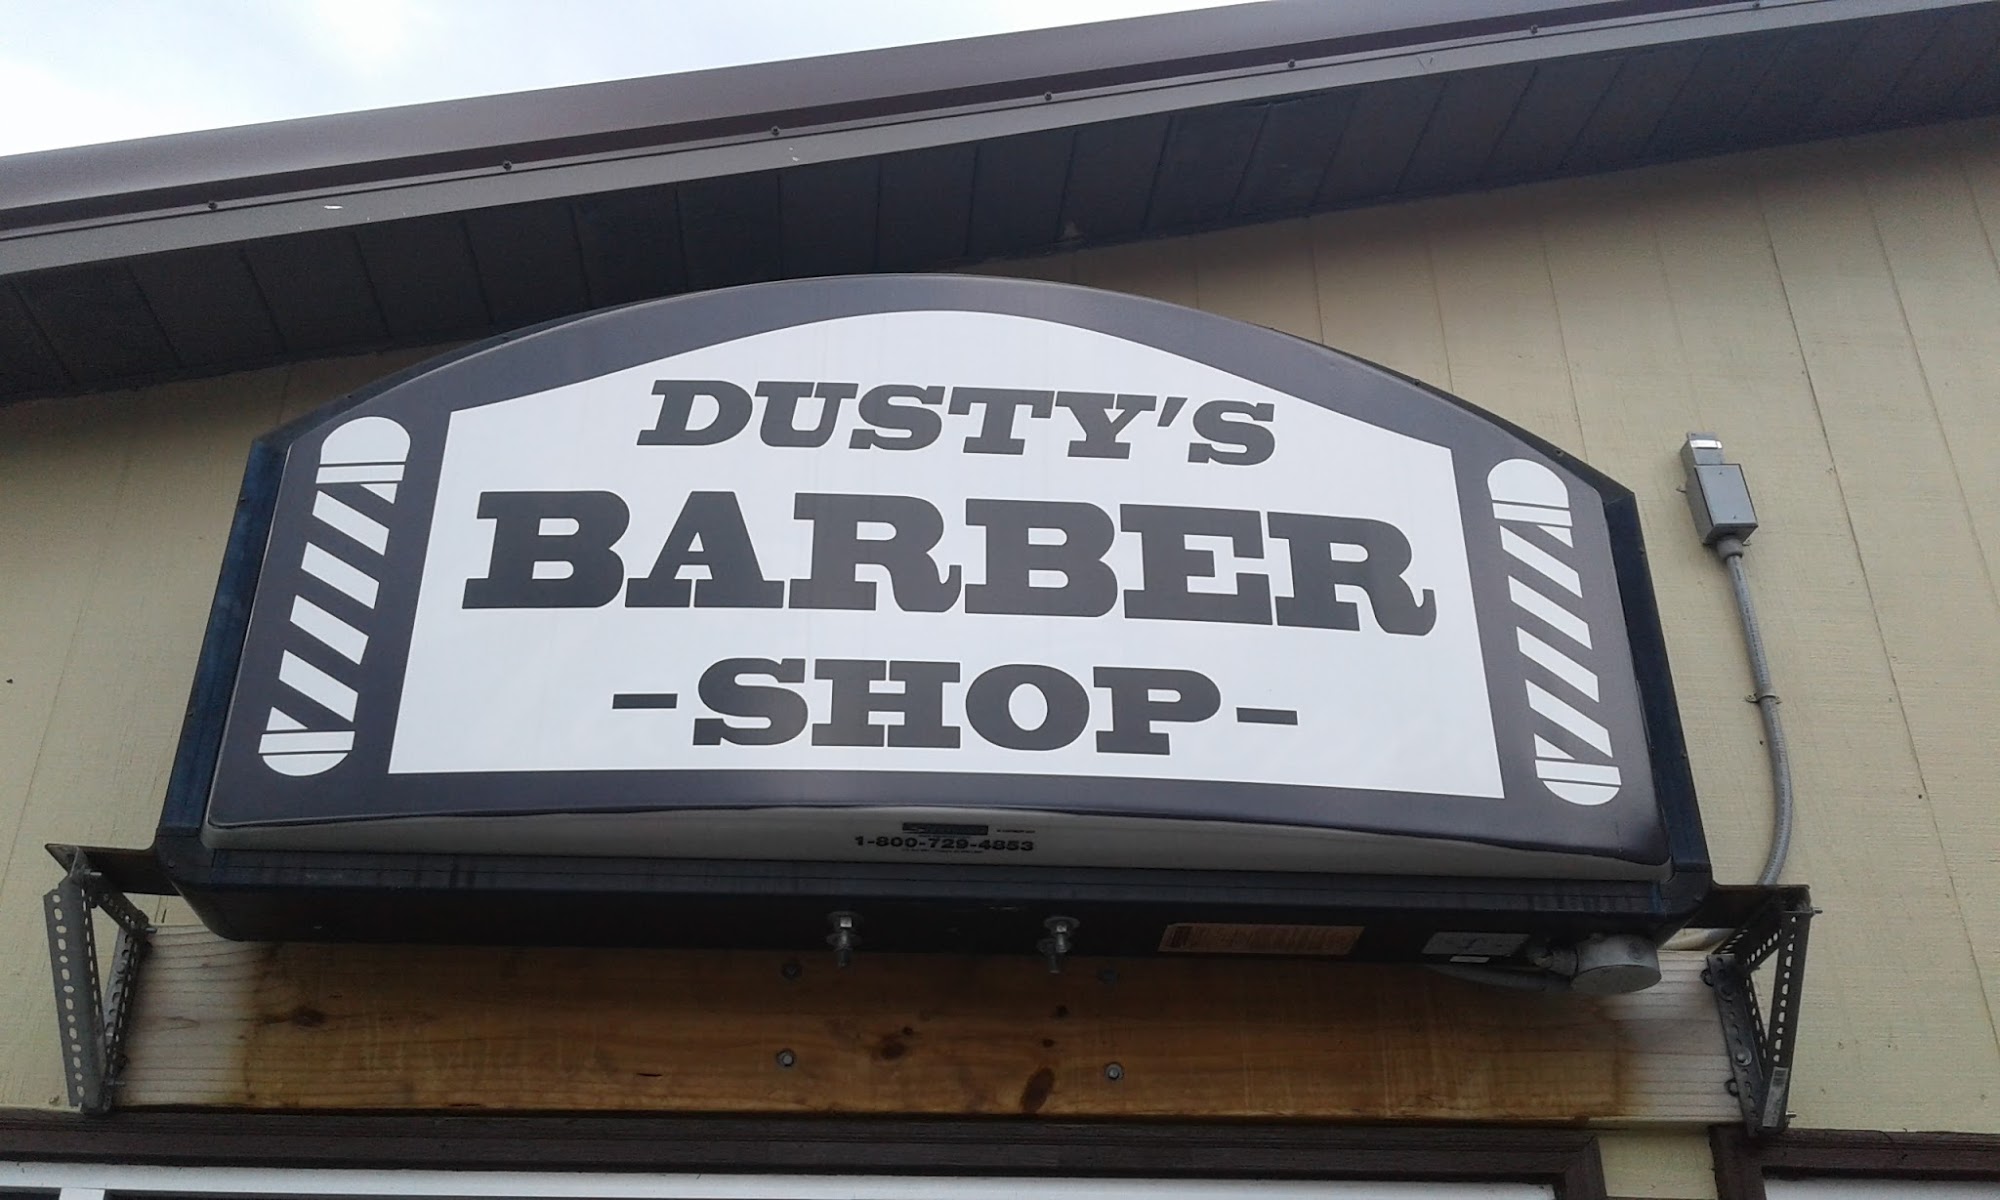 Dusty's Barber Shop